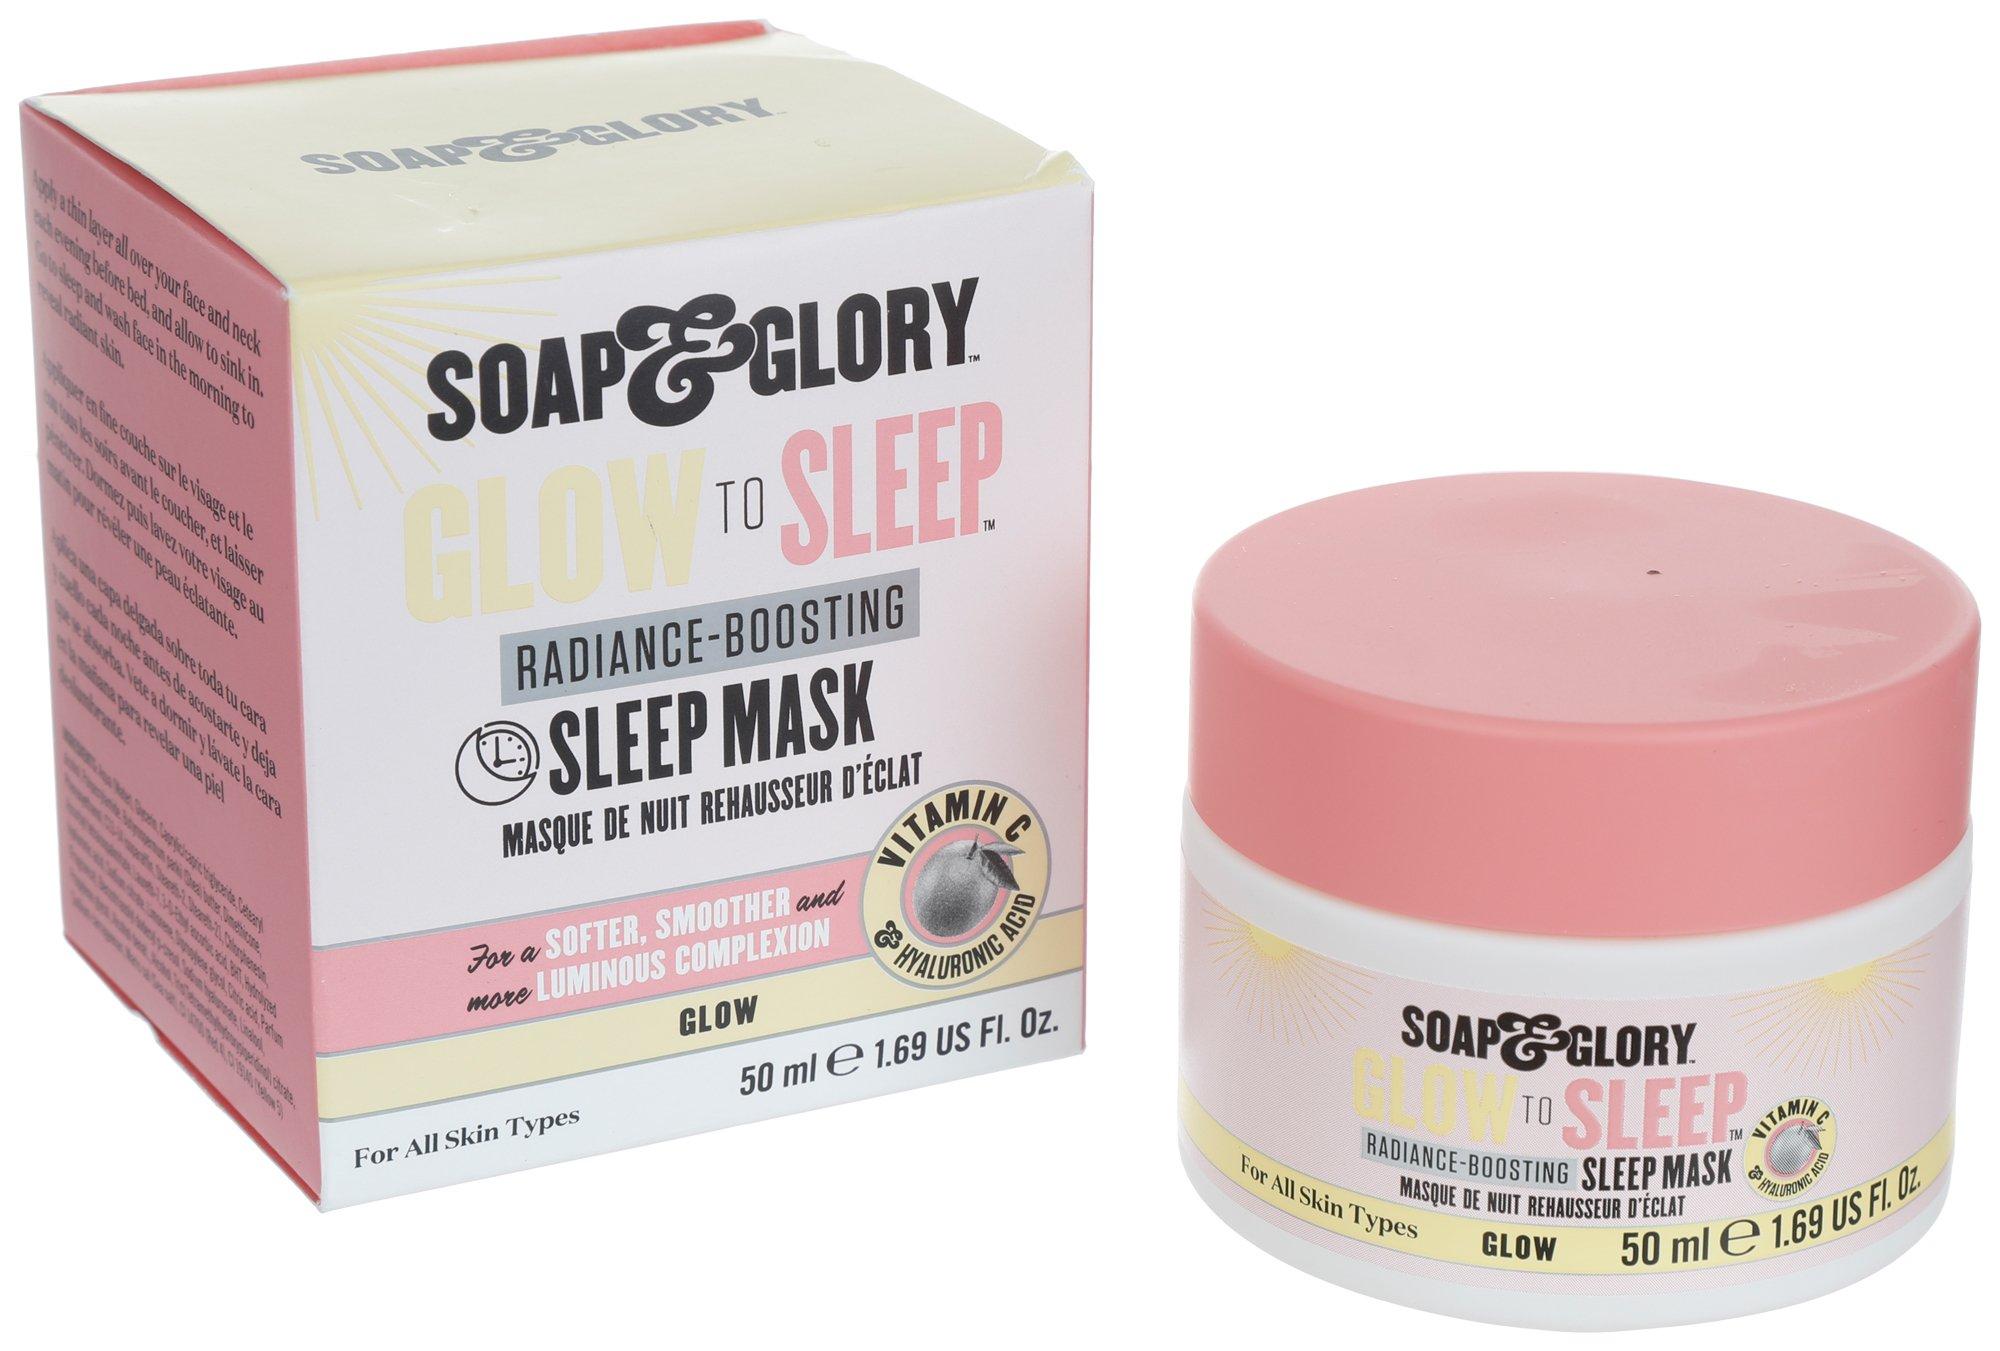 Glow to Sleep Radiance-Boosting Sleep Mask